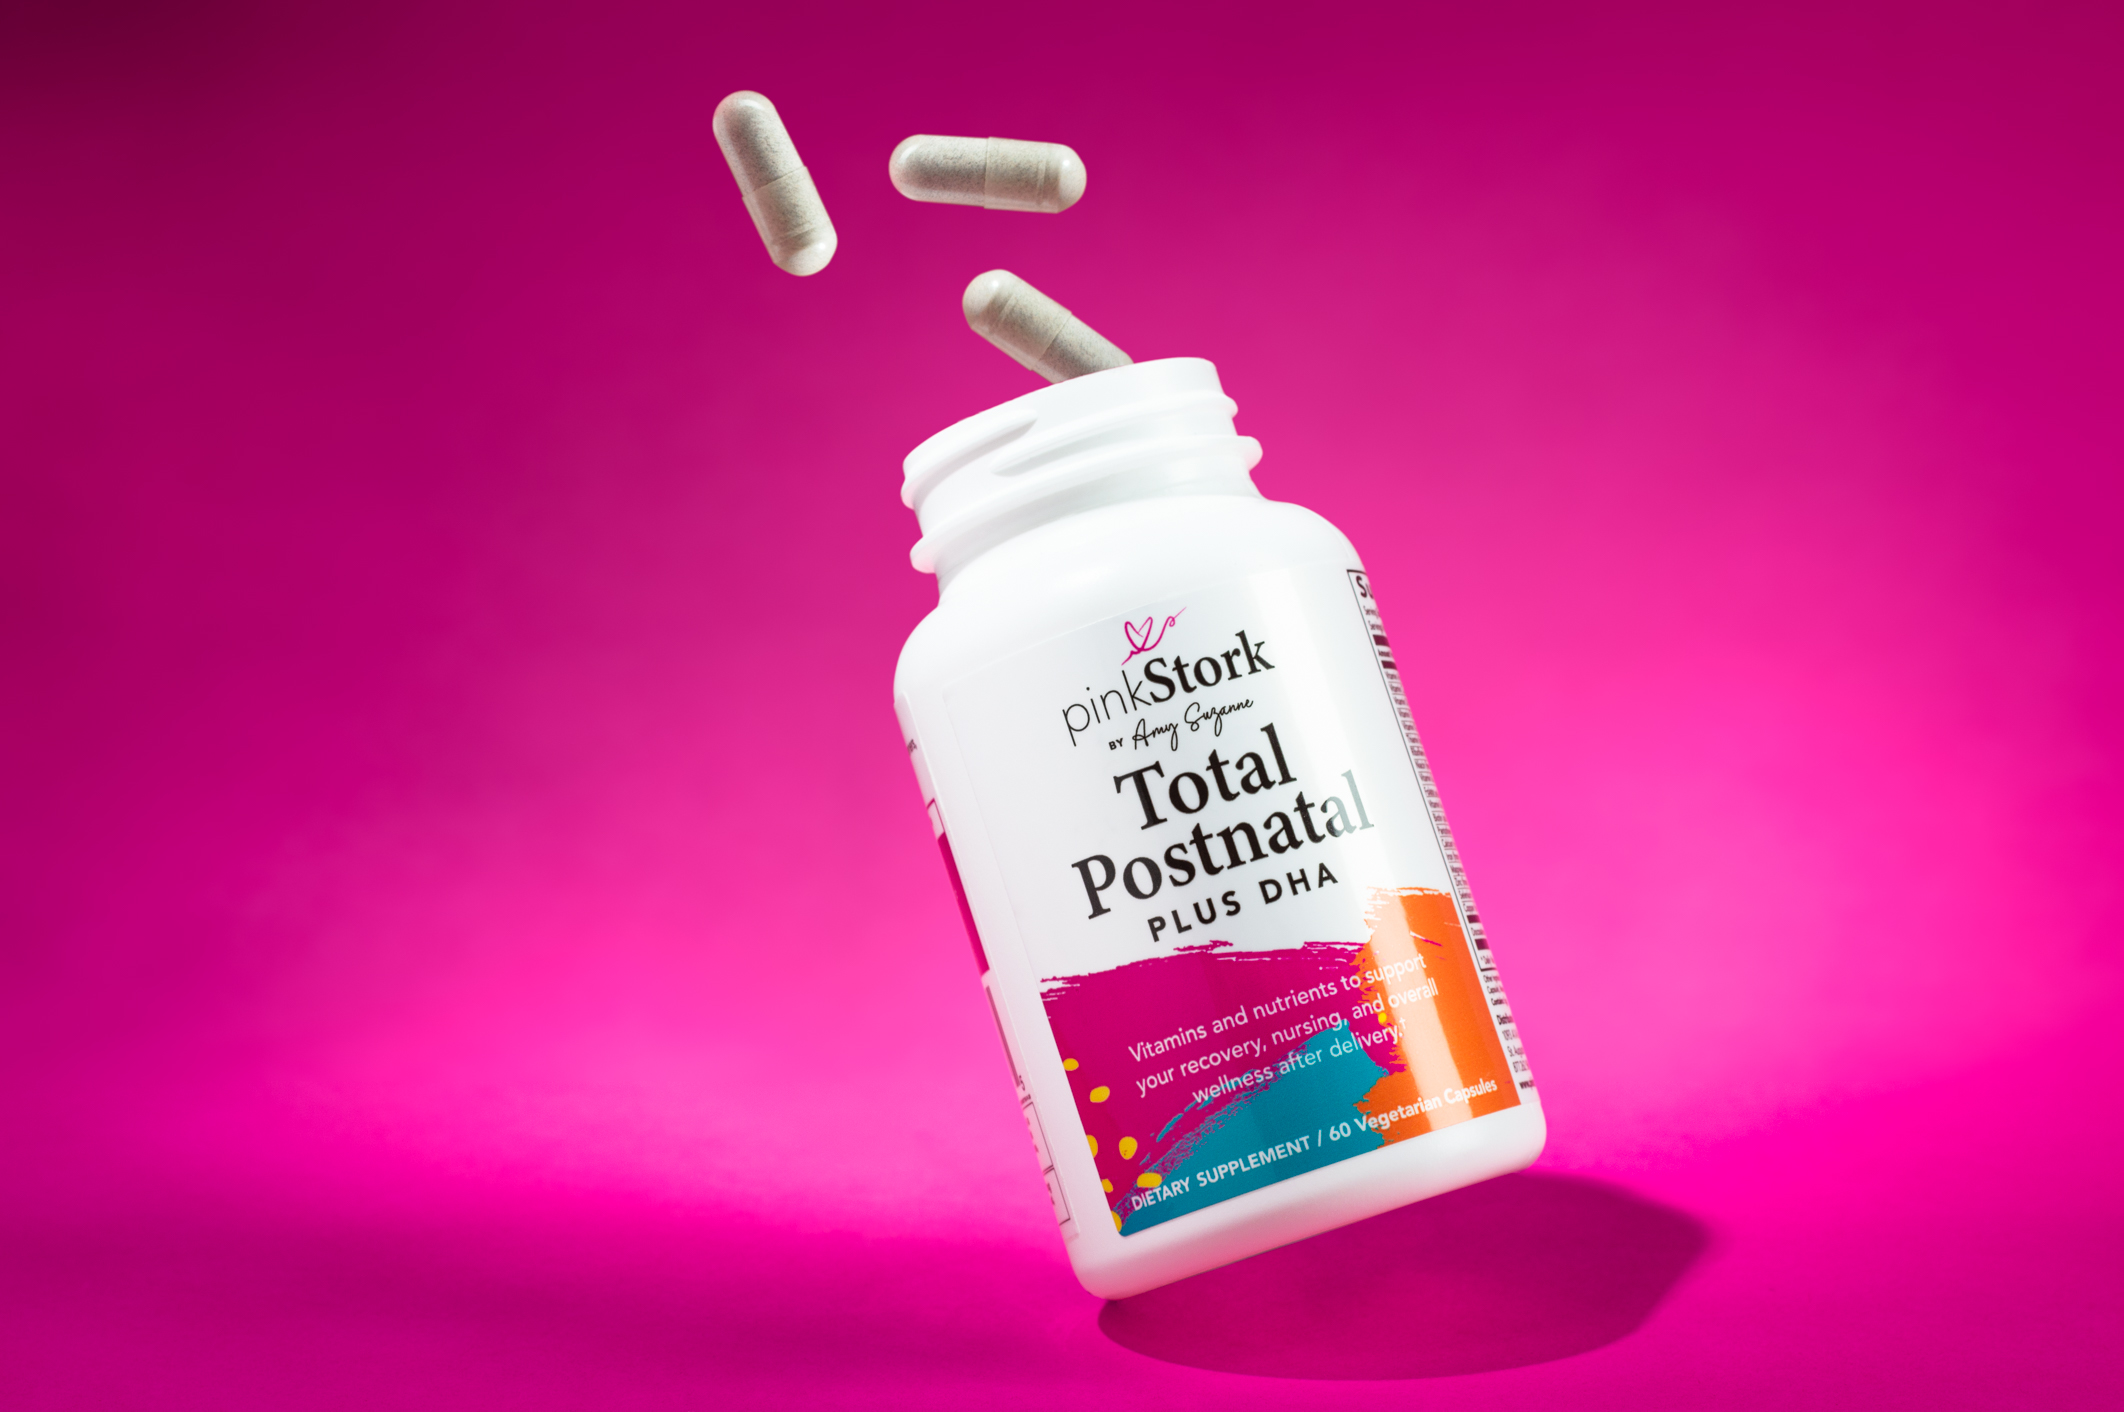 Total Postnatal Product Image